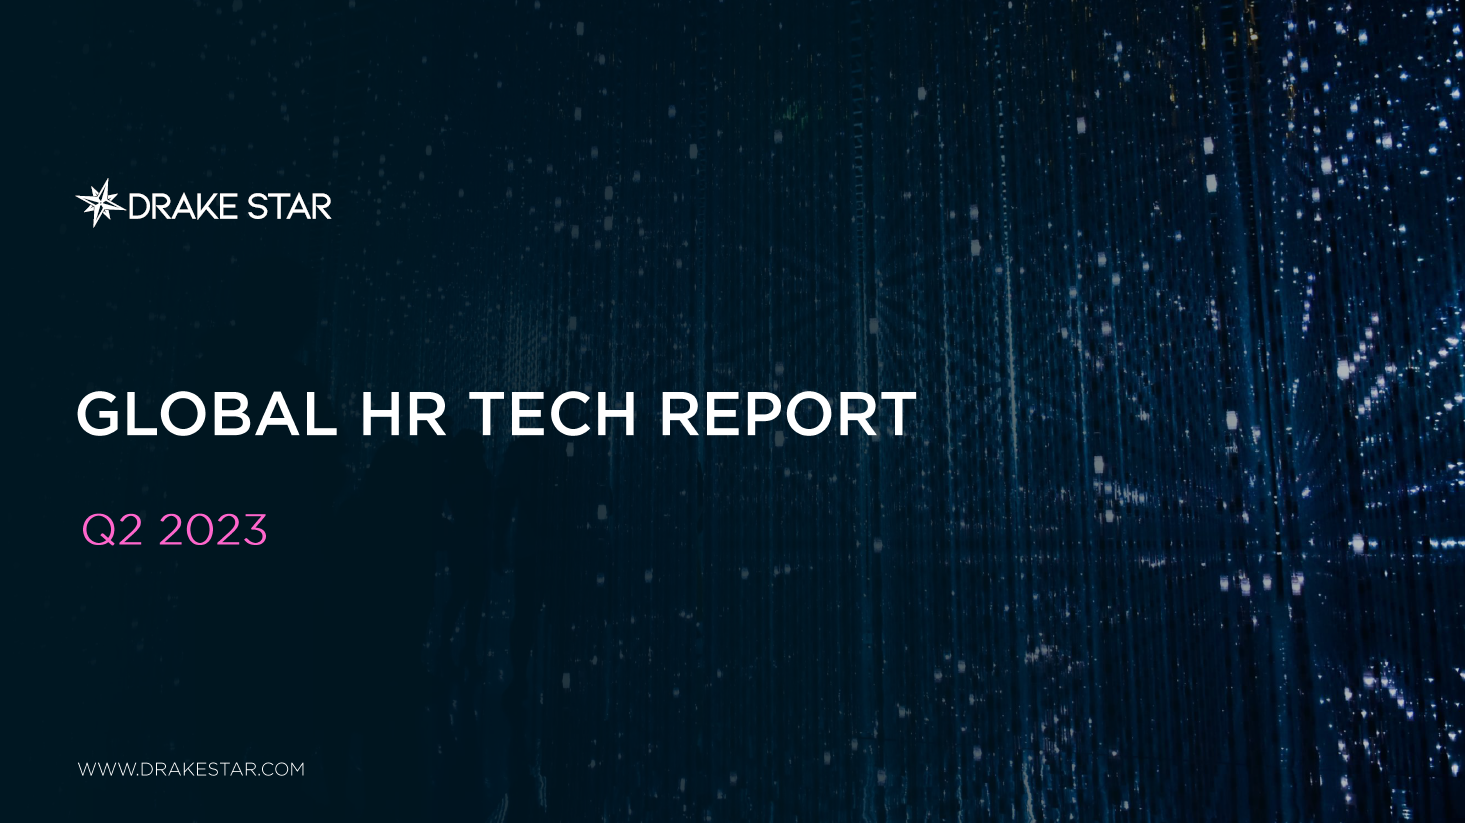 Global HR Tech Report Q2 2023